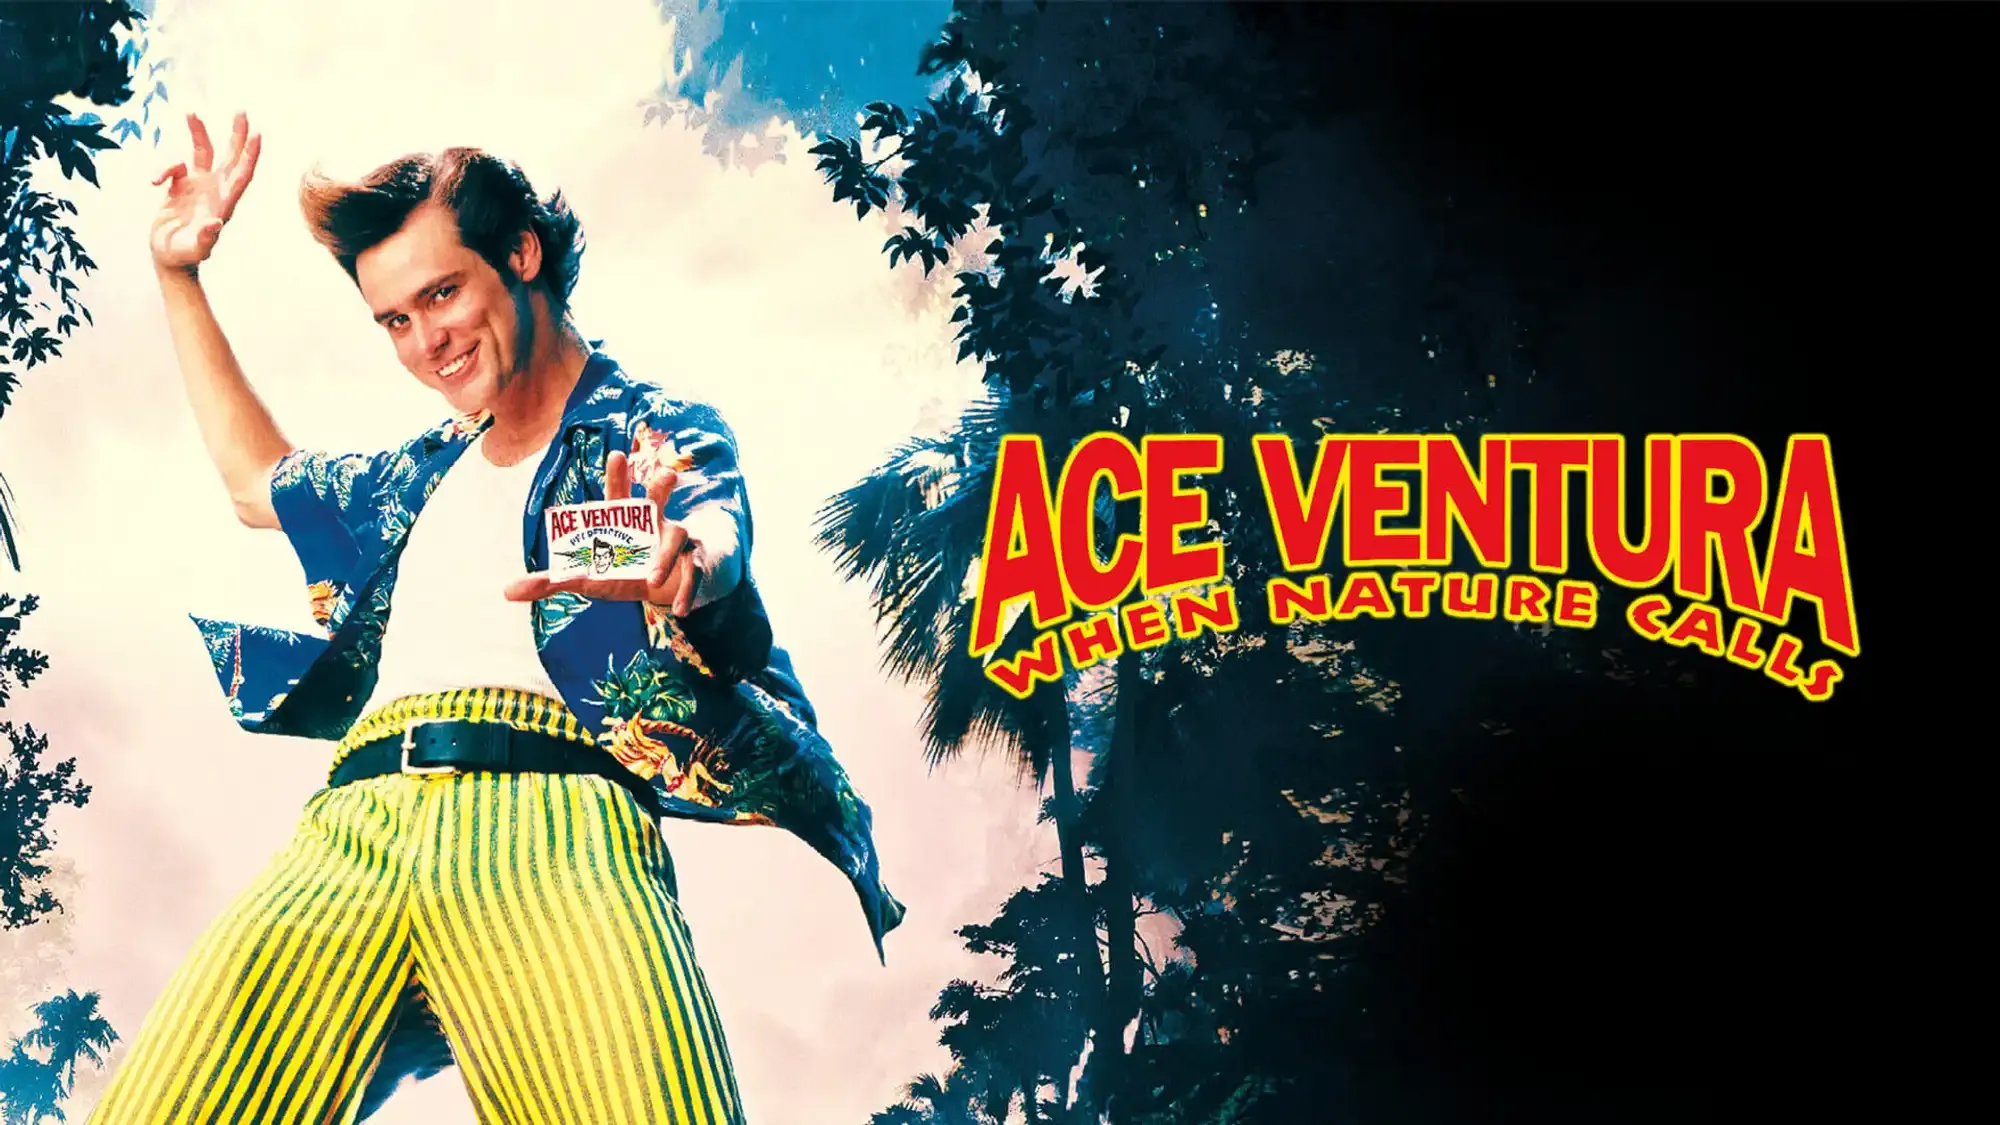 Ace Ventura: When Nature Calls movie review